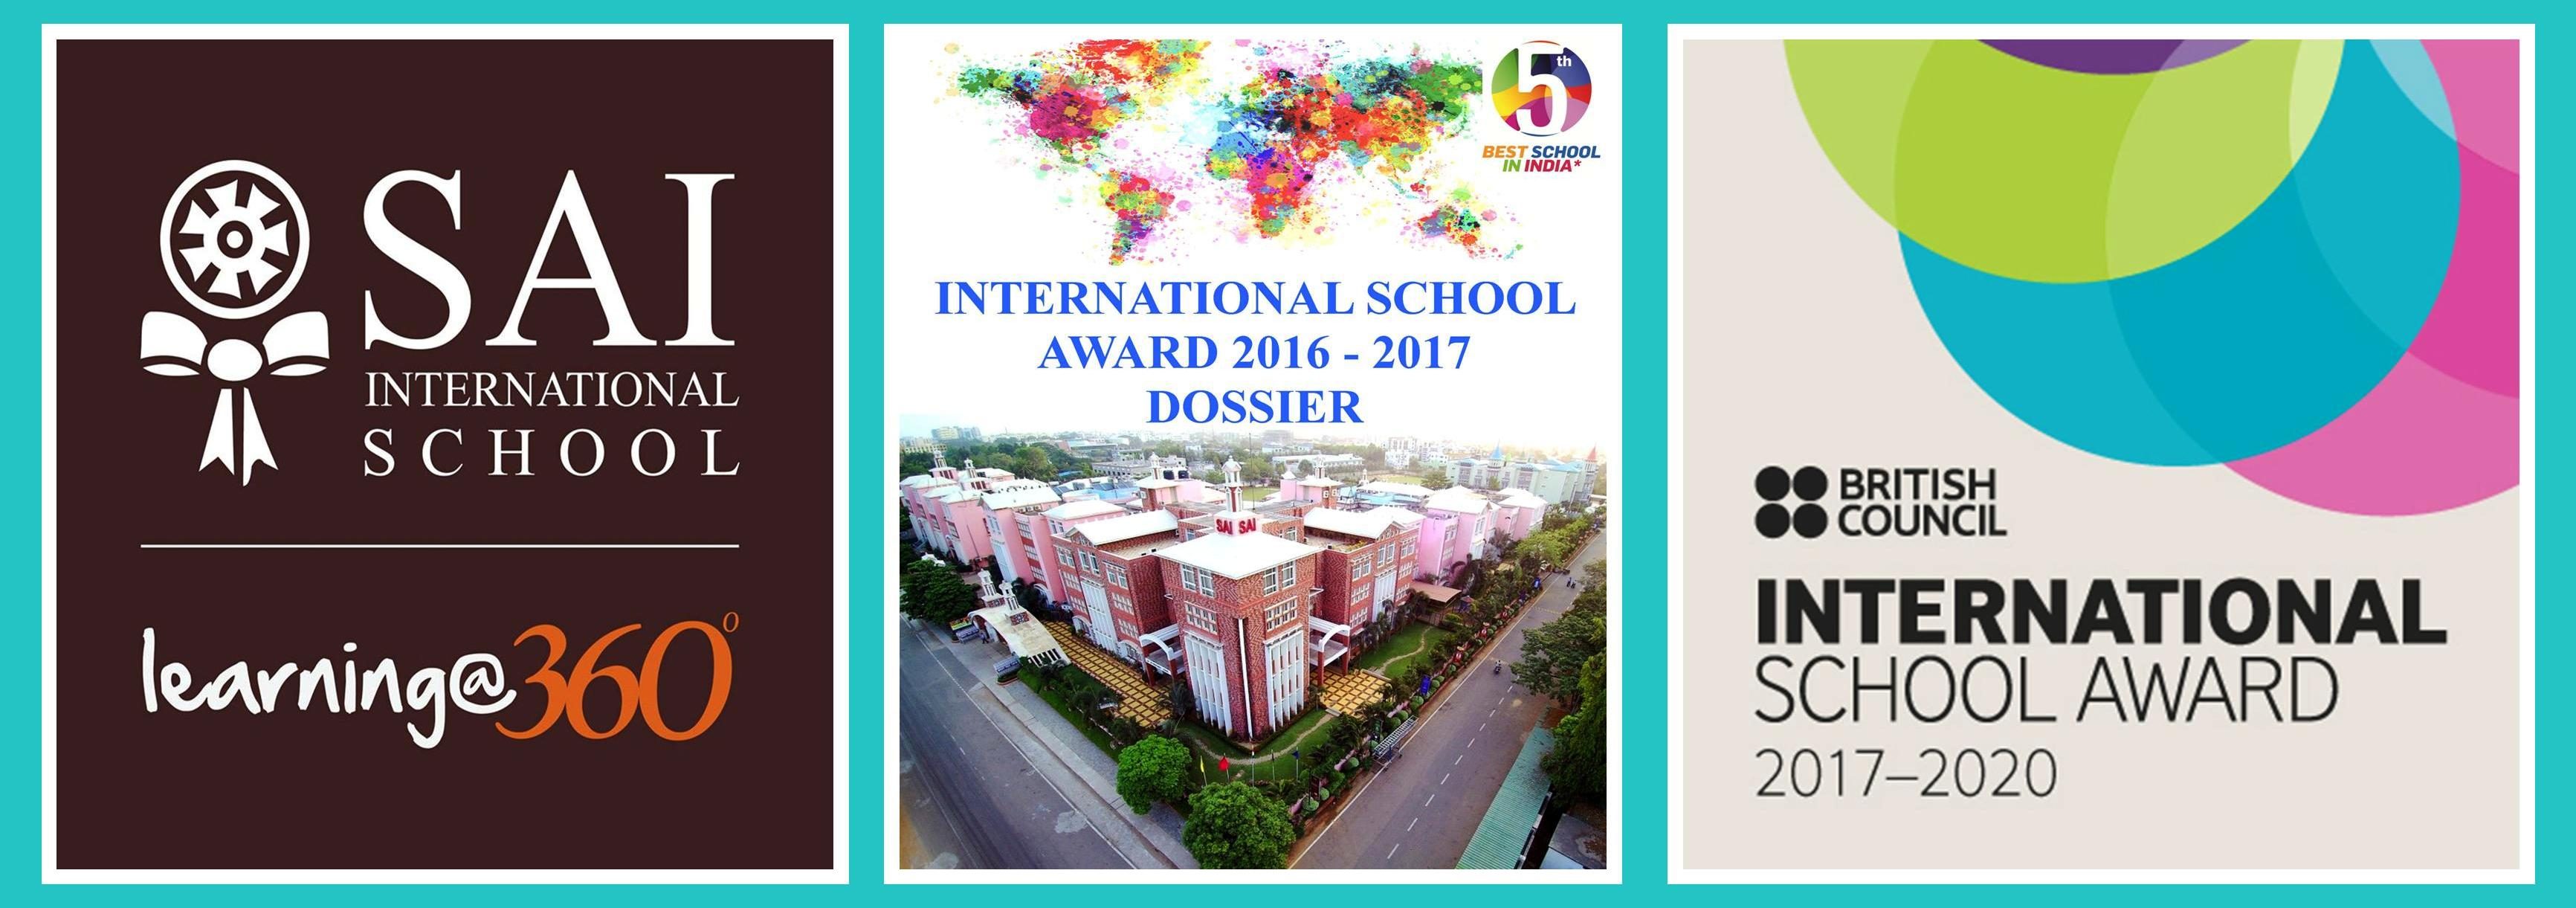 International School Award 2017- 2020